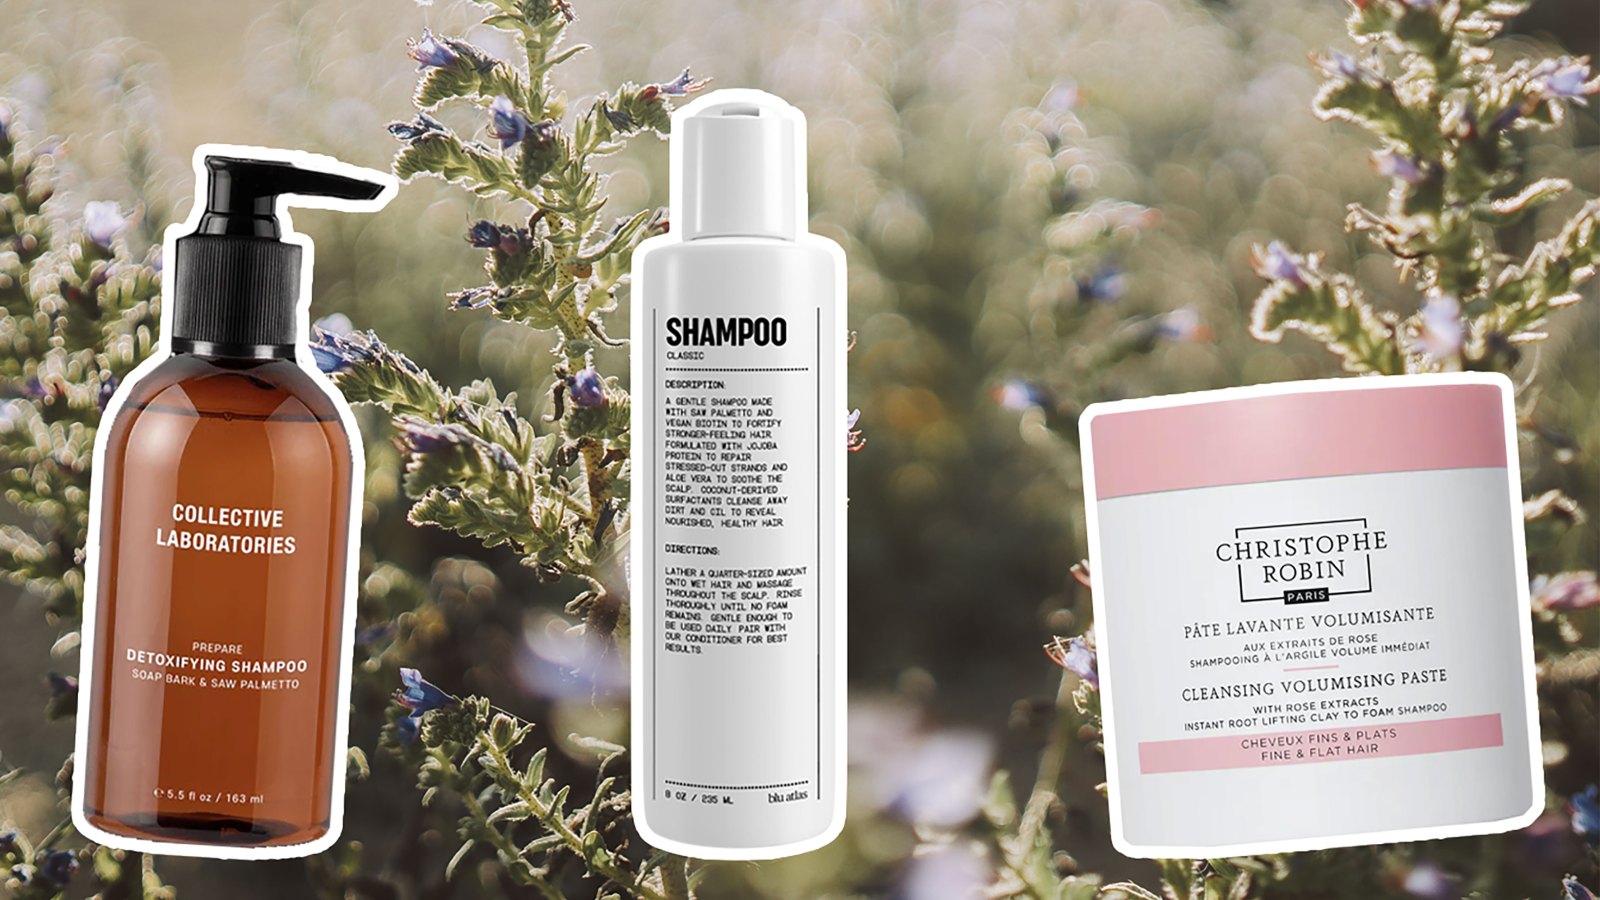 Fix Your Lid Shampoo 8.5 oz